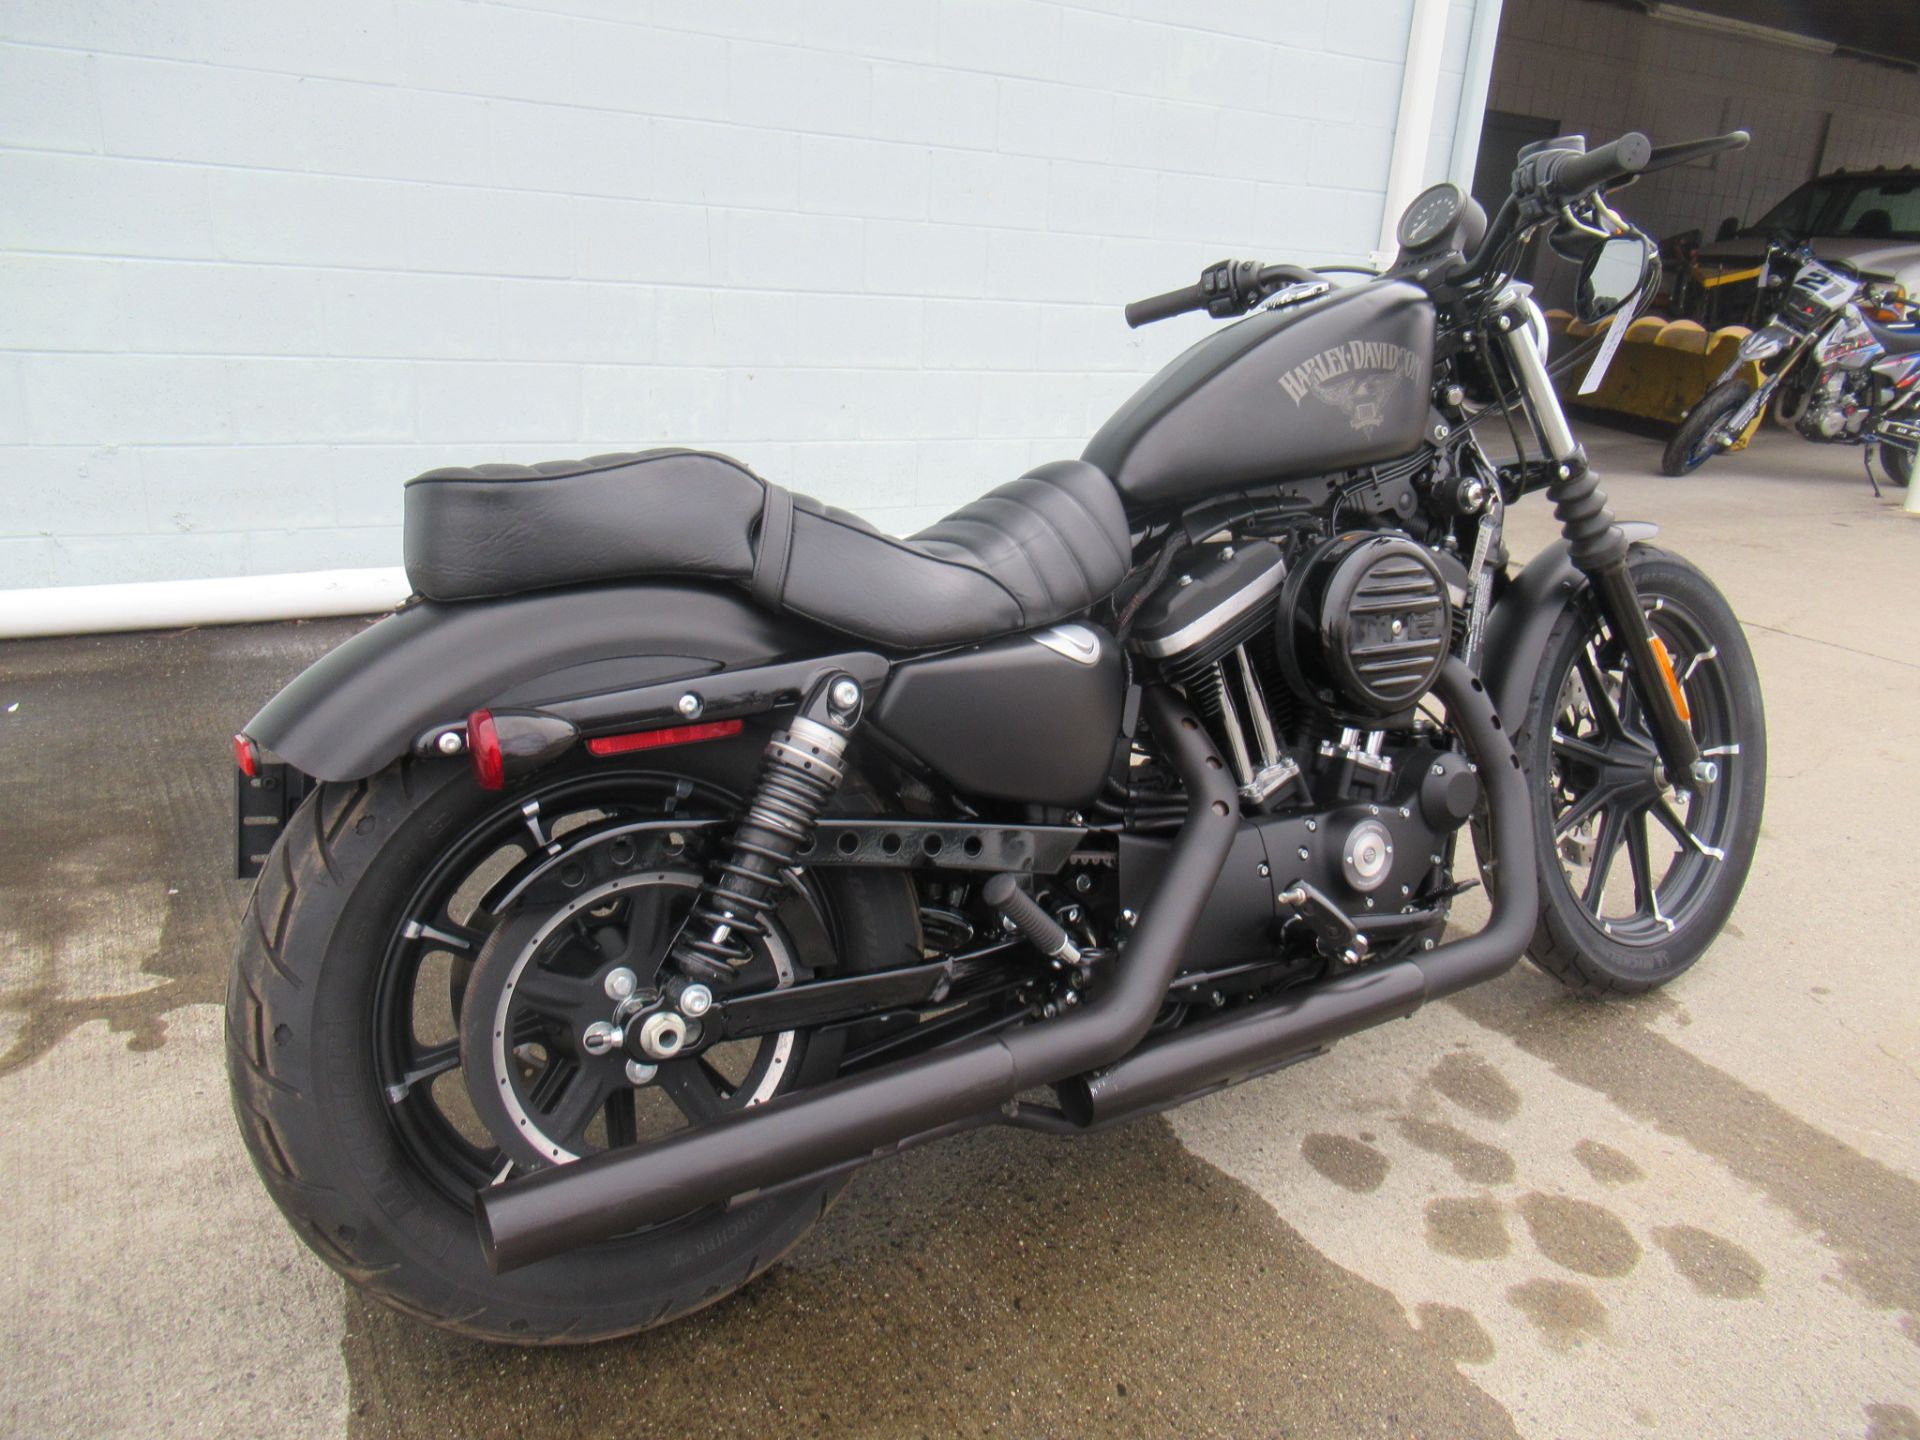 2018 Harley-Davidson Iron 883™ in Springfield, Massachusetts - Photo 3